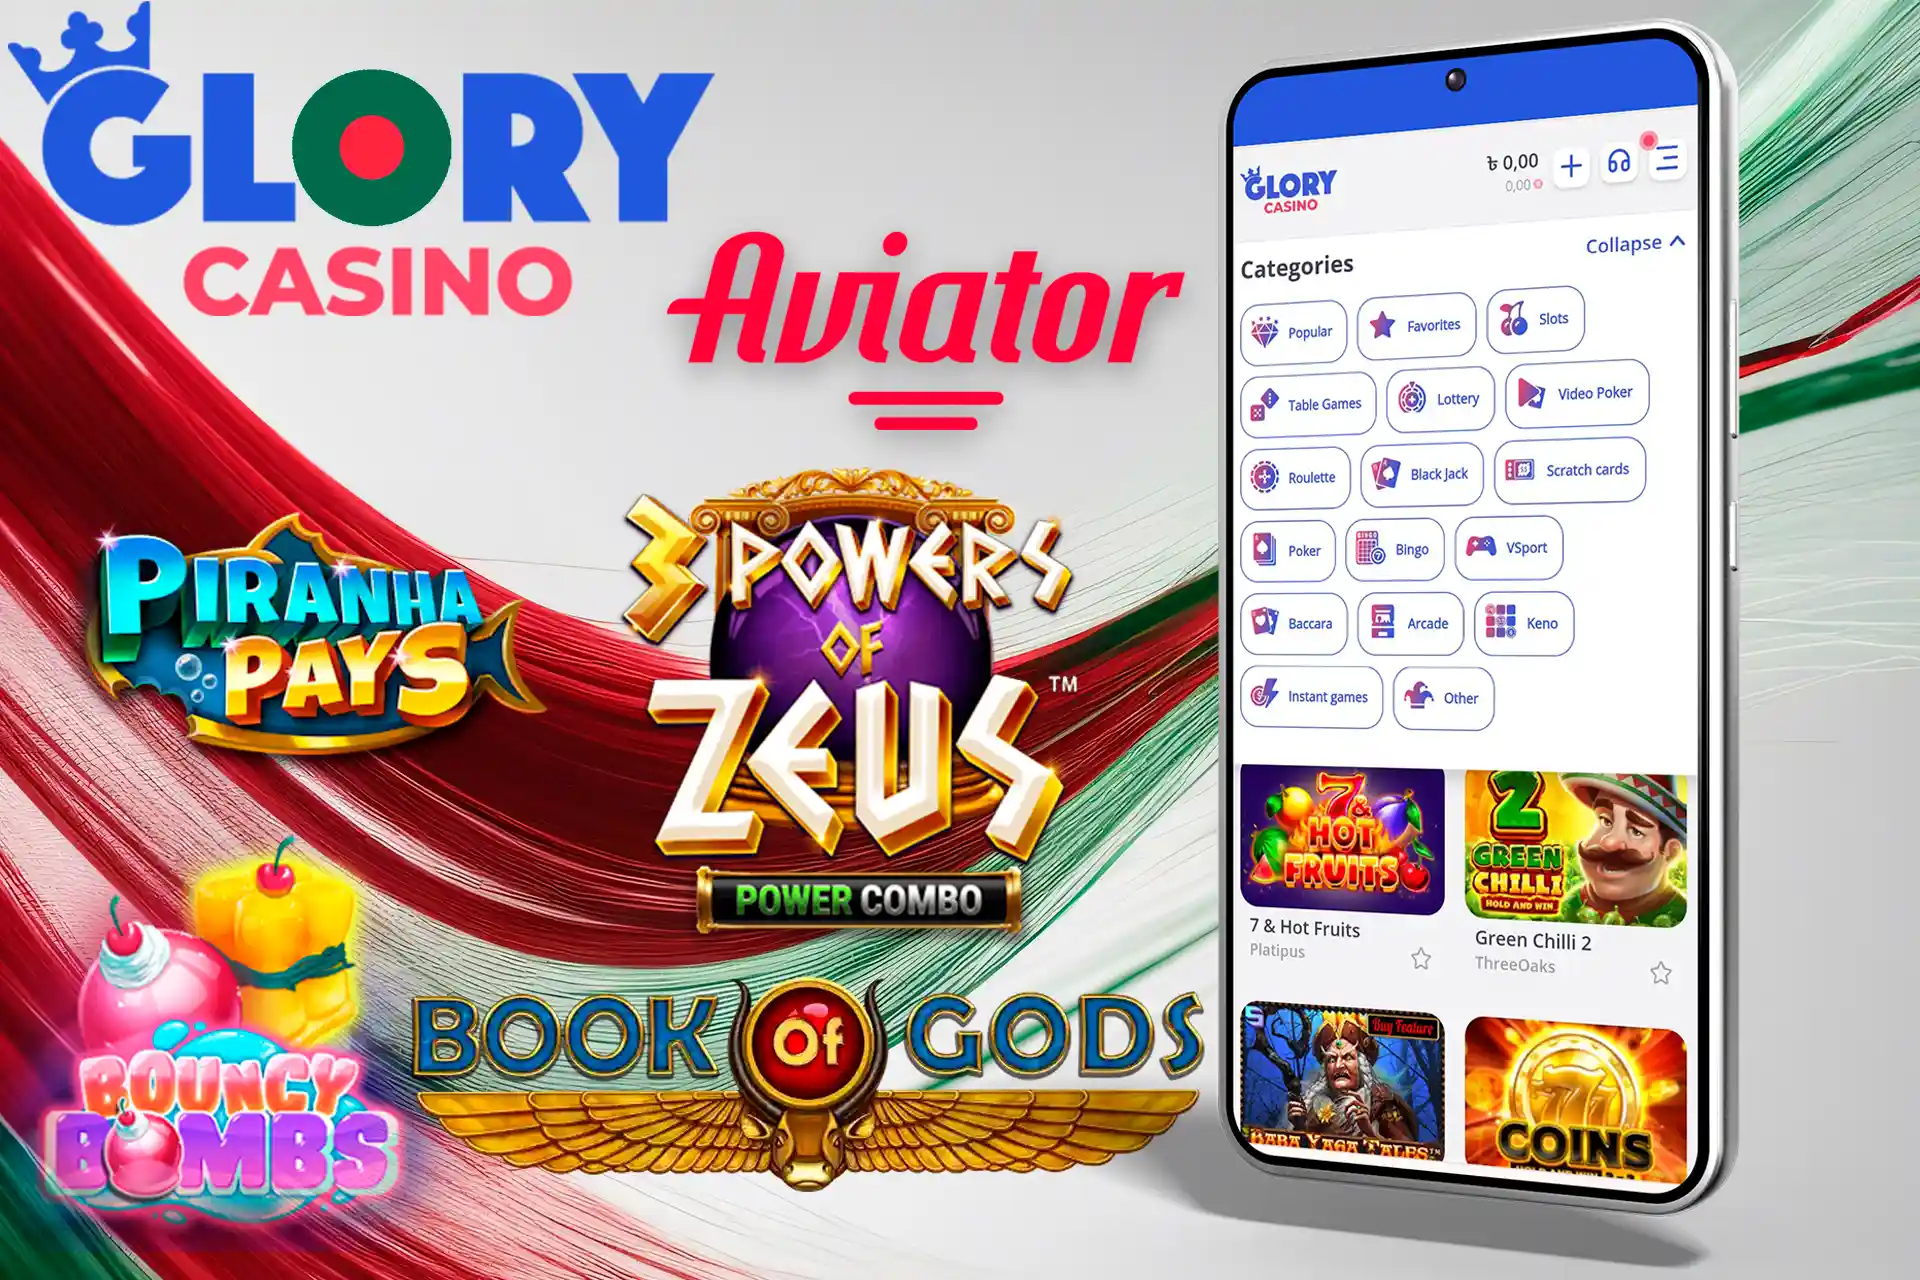 Lots of gambling casino games in the Glory Casino Bangladesh mobile application